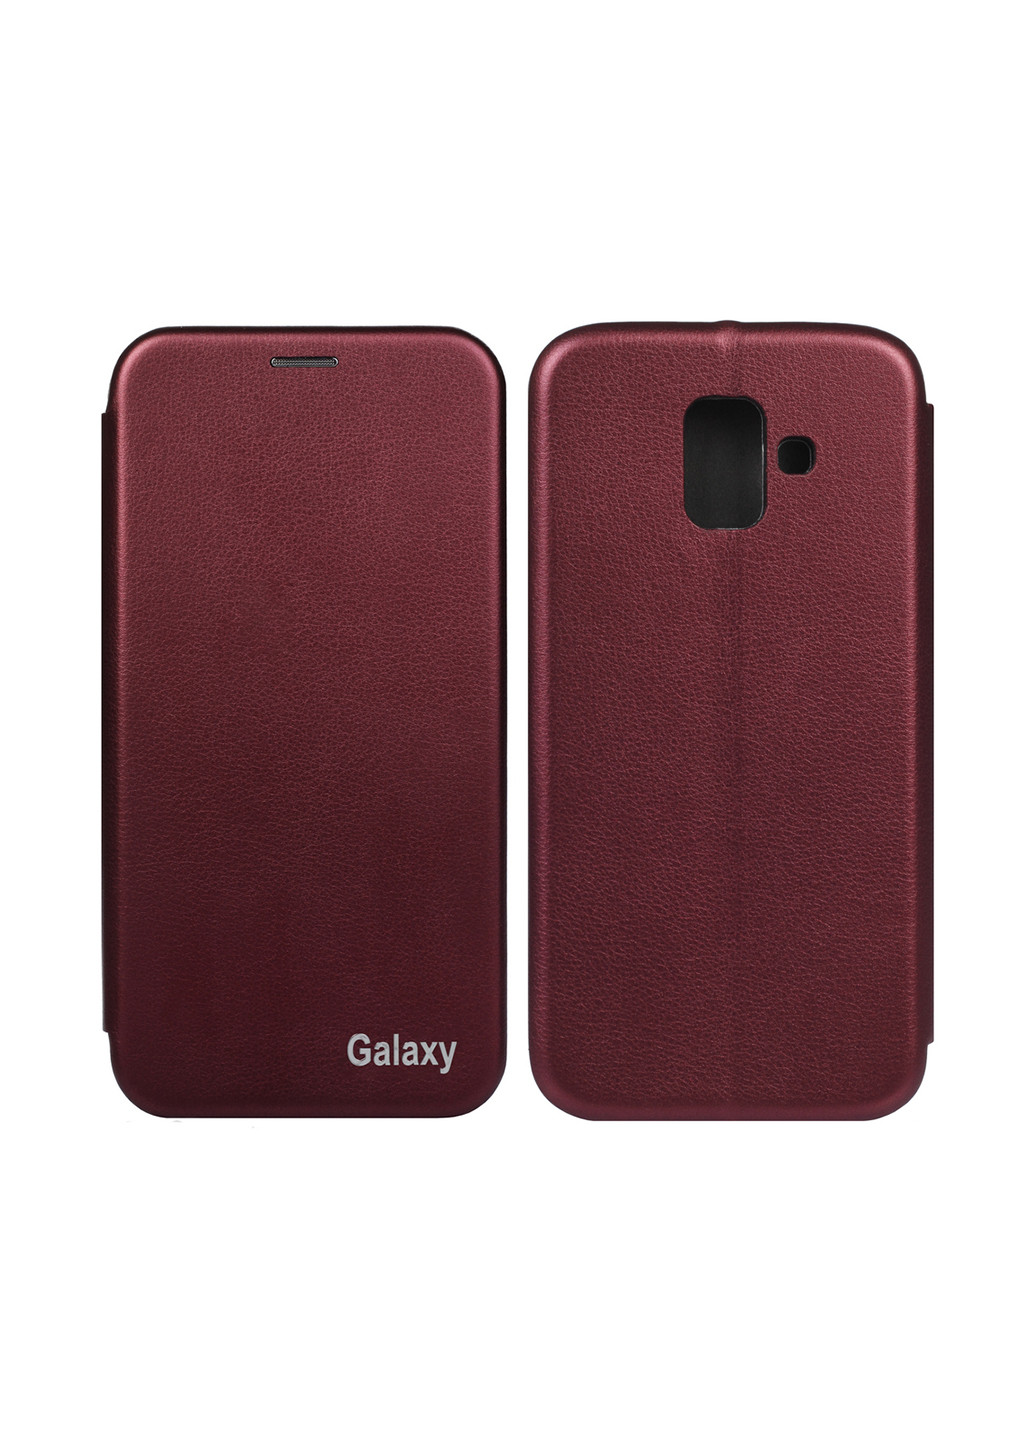 Чохол-книжка Exclusive для Samsung Galaxy A6 SM-A600 Burgundy Red (702523) BeCover книжка exclusive для samsung galaxy a6 sm-a600 burgundy red (702523) (145630544)